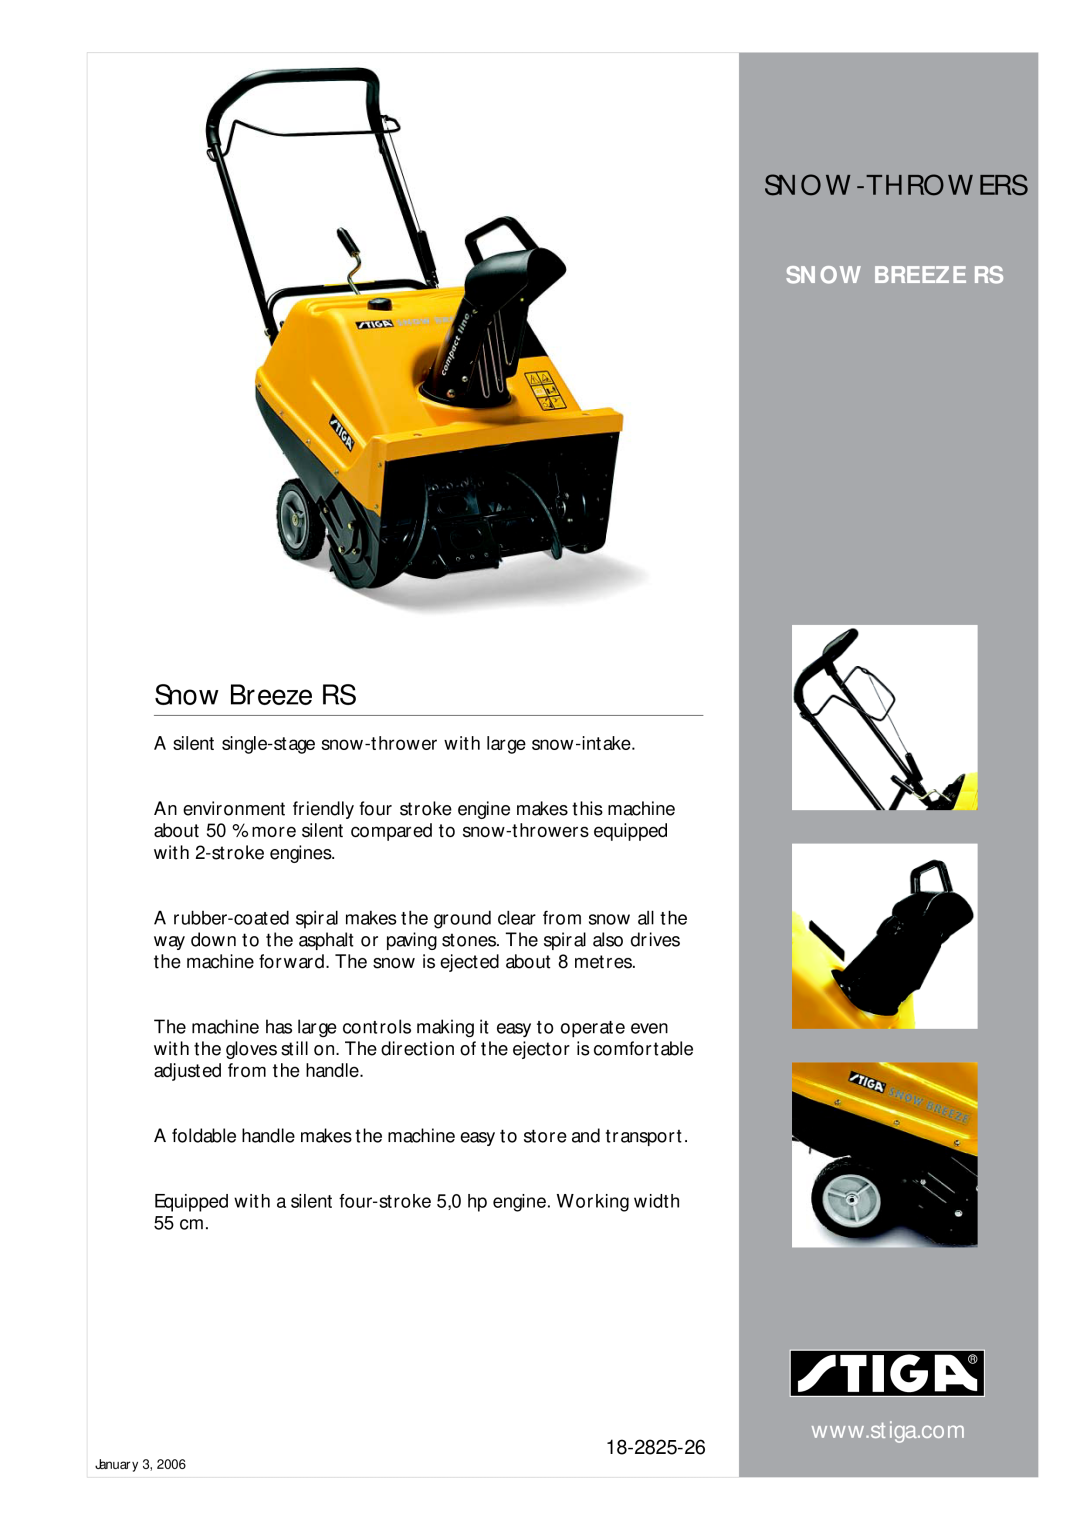 Stiga 18-2825-26 manual Snow-Throwers, Snow Breeze RS, Snow Breeze Rs 